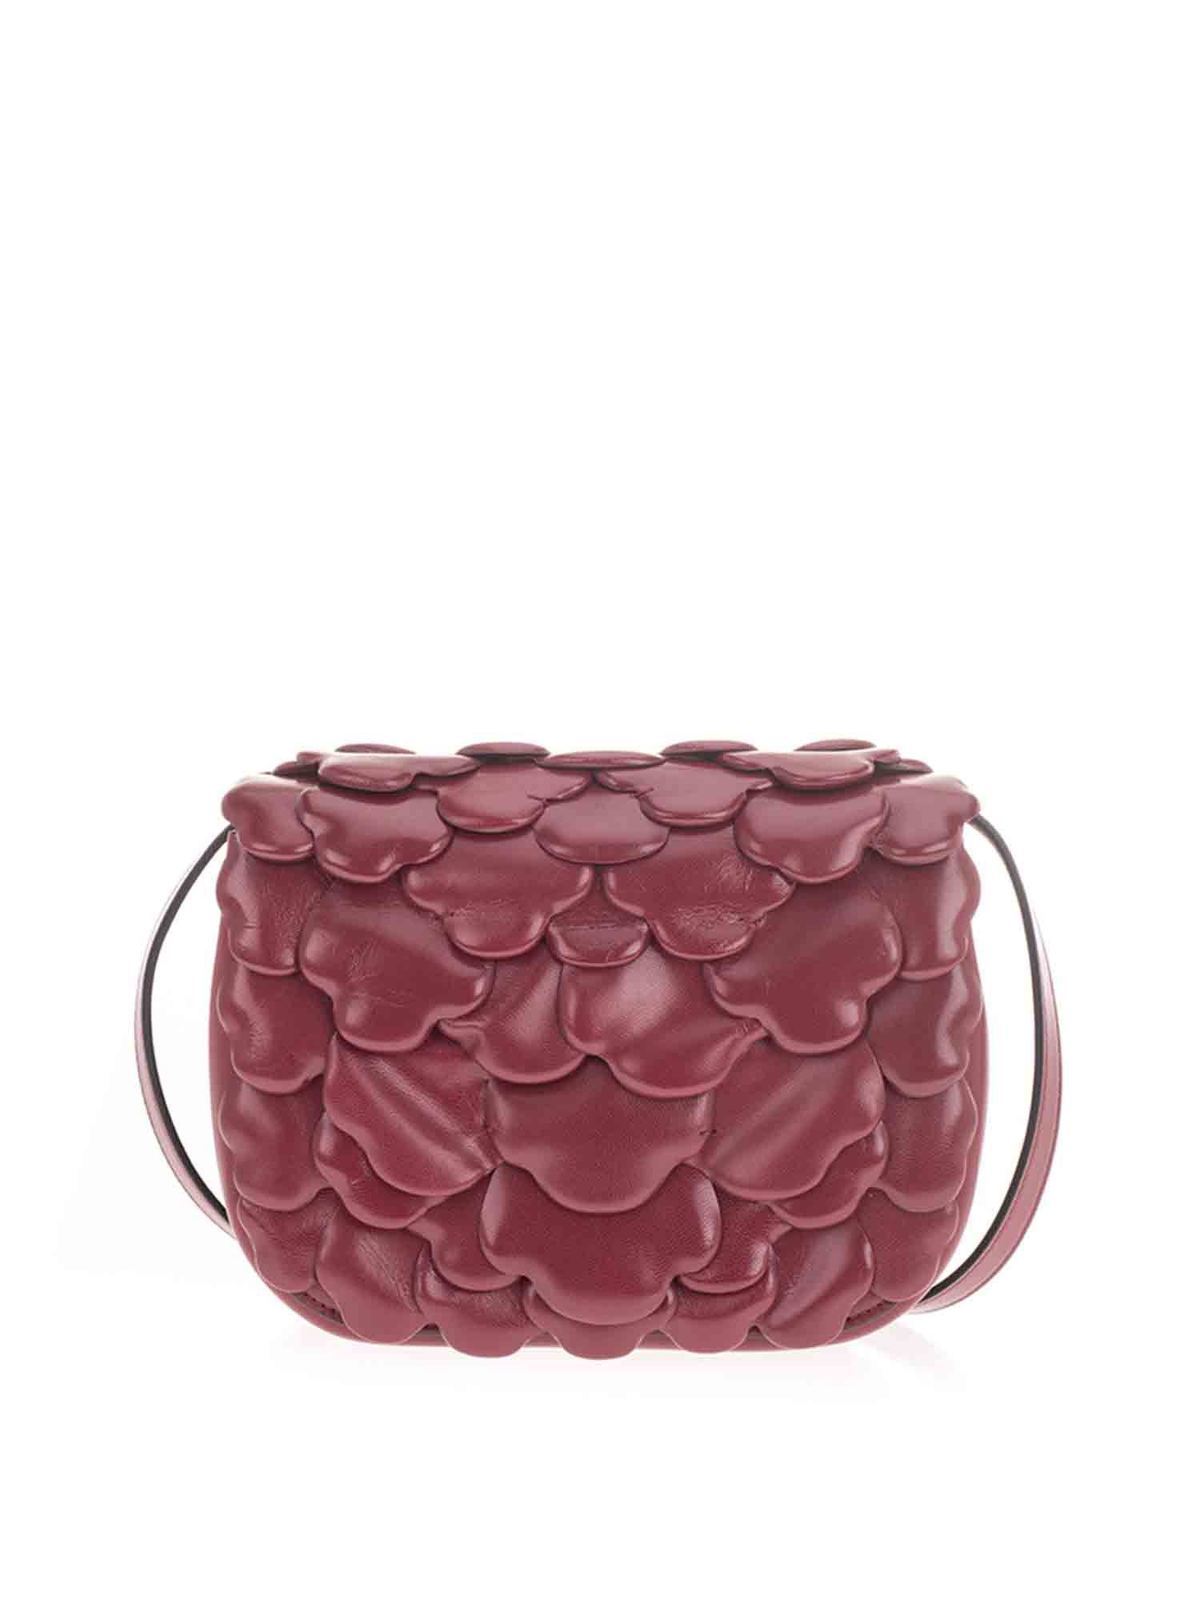 body bags Valentino Garavani - Atelier 03 Rose Edition bag in burgundy UW0B0I02JBZC52